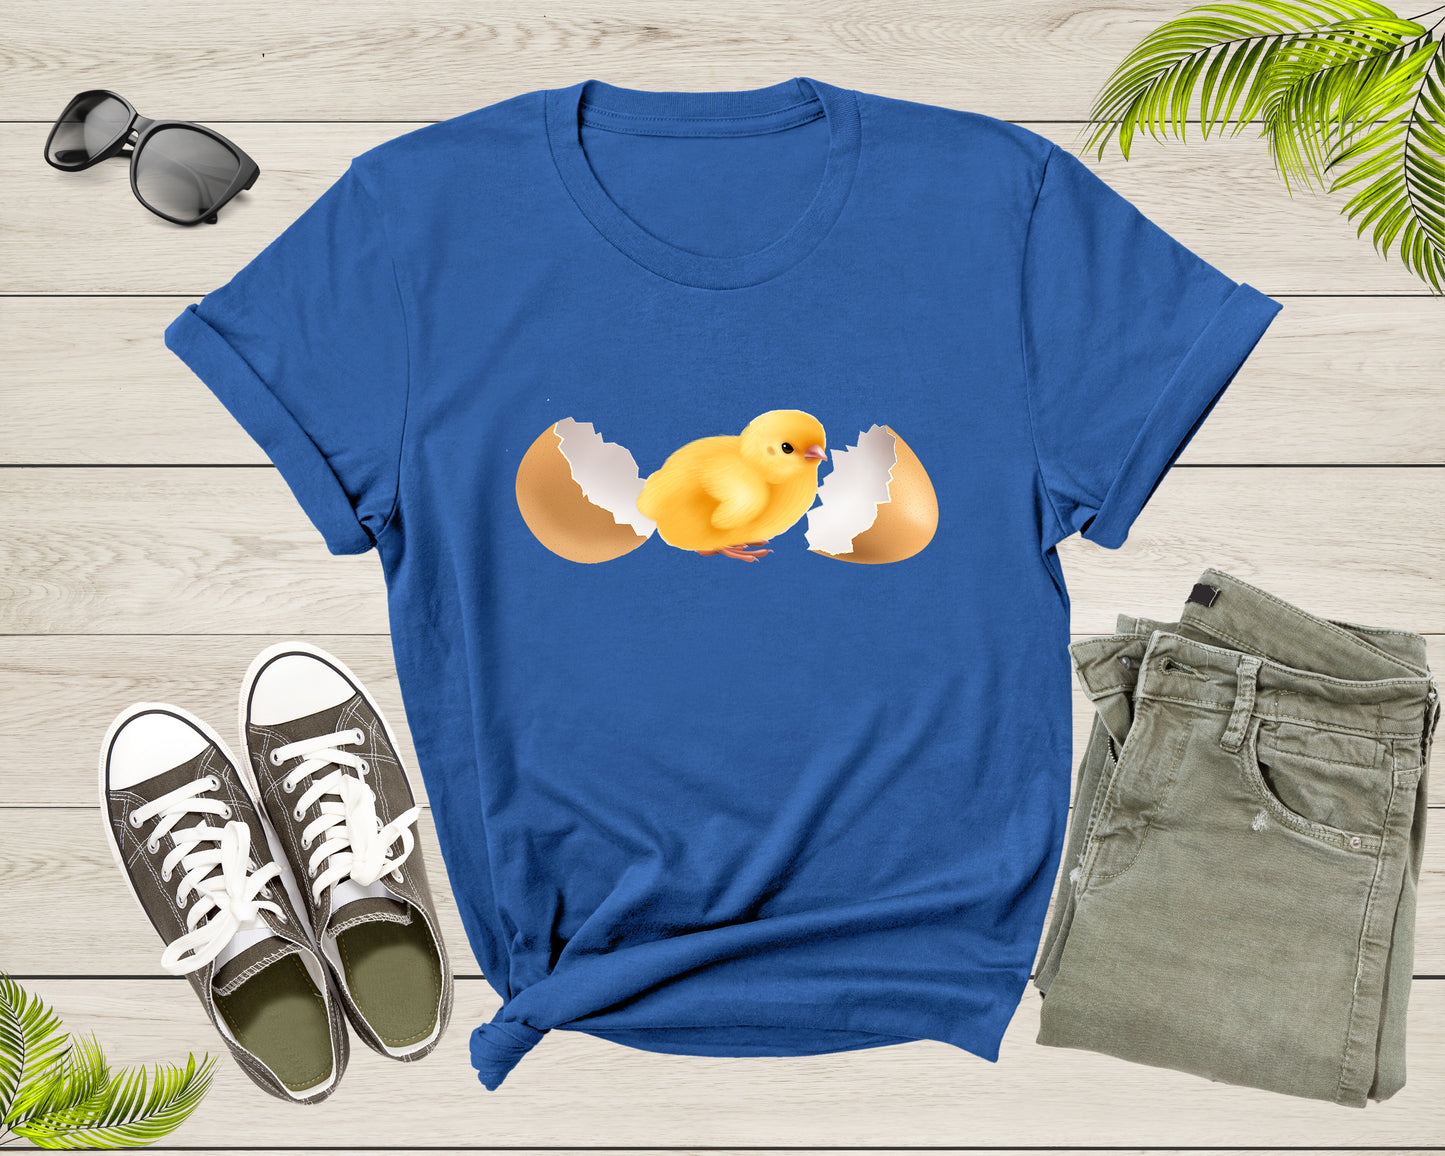 Cute Yellow Chick Chicken Hatched Egg Teen Men Women Kids T-Shirt Chicken Lover Gift T Shirt for Men Women Kids Boys Girls Graphic Tshirt